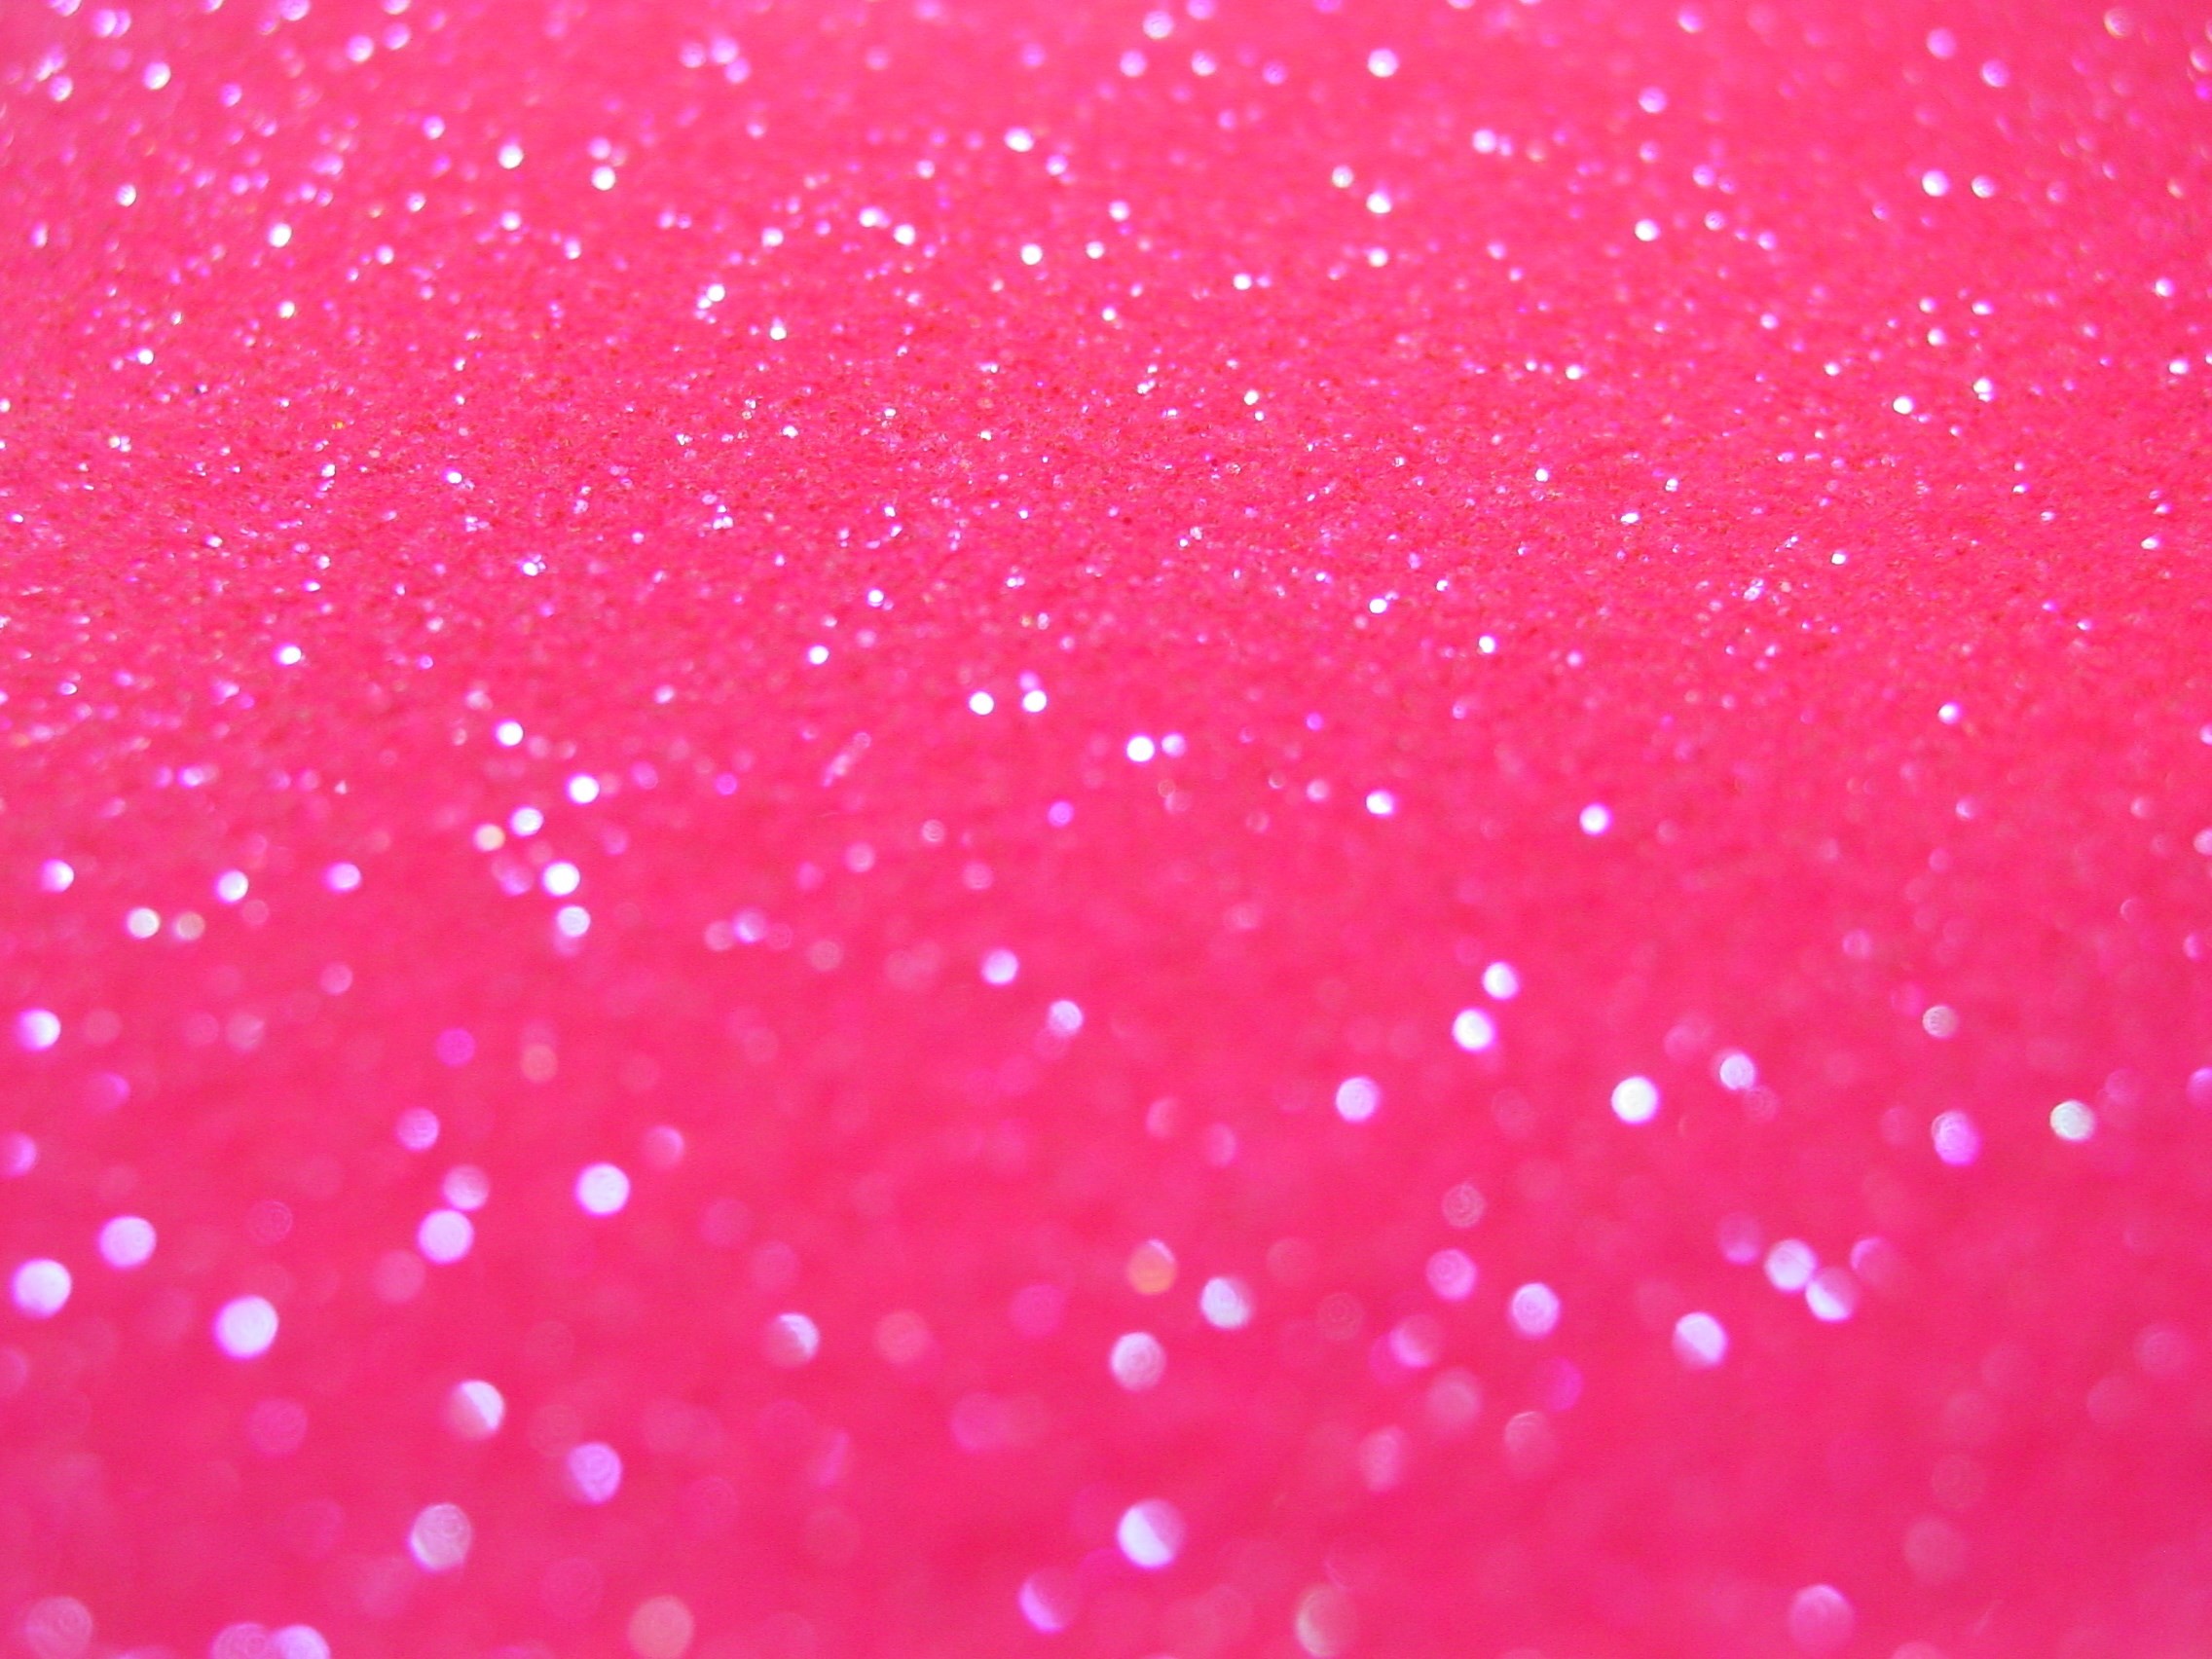 2272x1704 pink-glitter-image-1080p-windows-wallpaper-wpc9001331